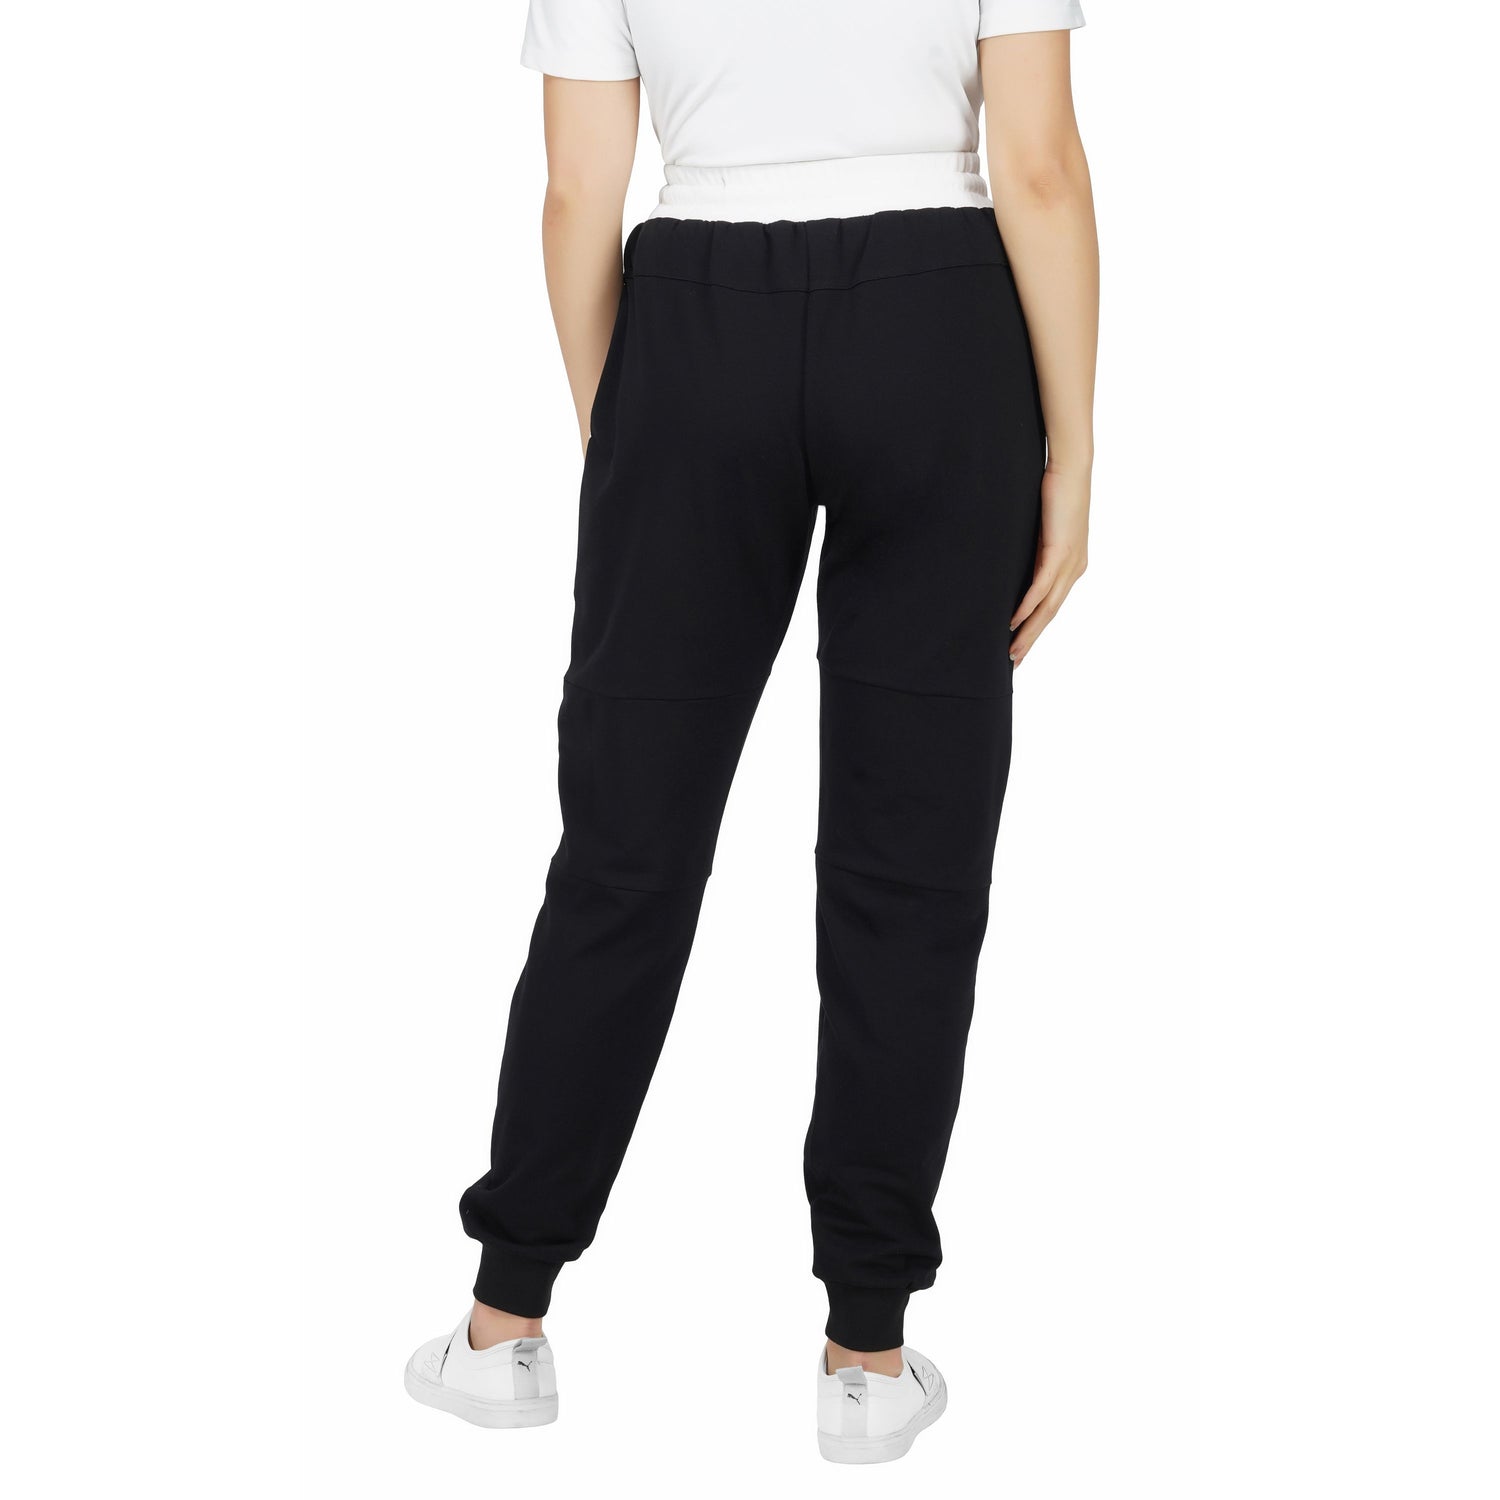 SLAY. Women's Black Jogger Pants With White Stripes-clothing-to-slay.myshopify.com-Joggers